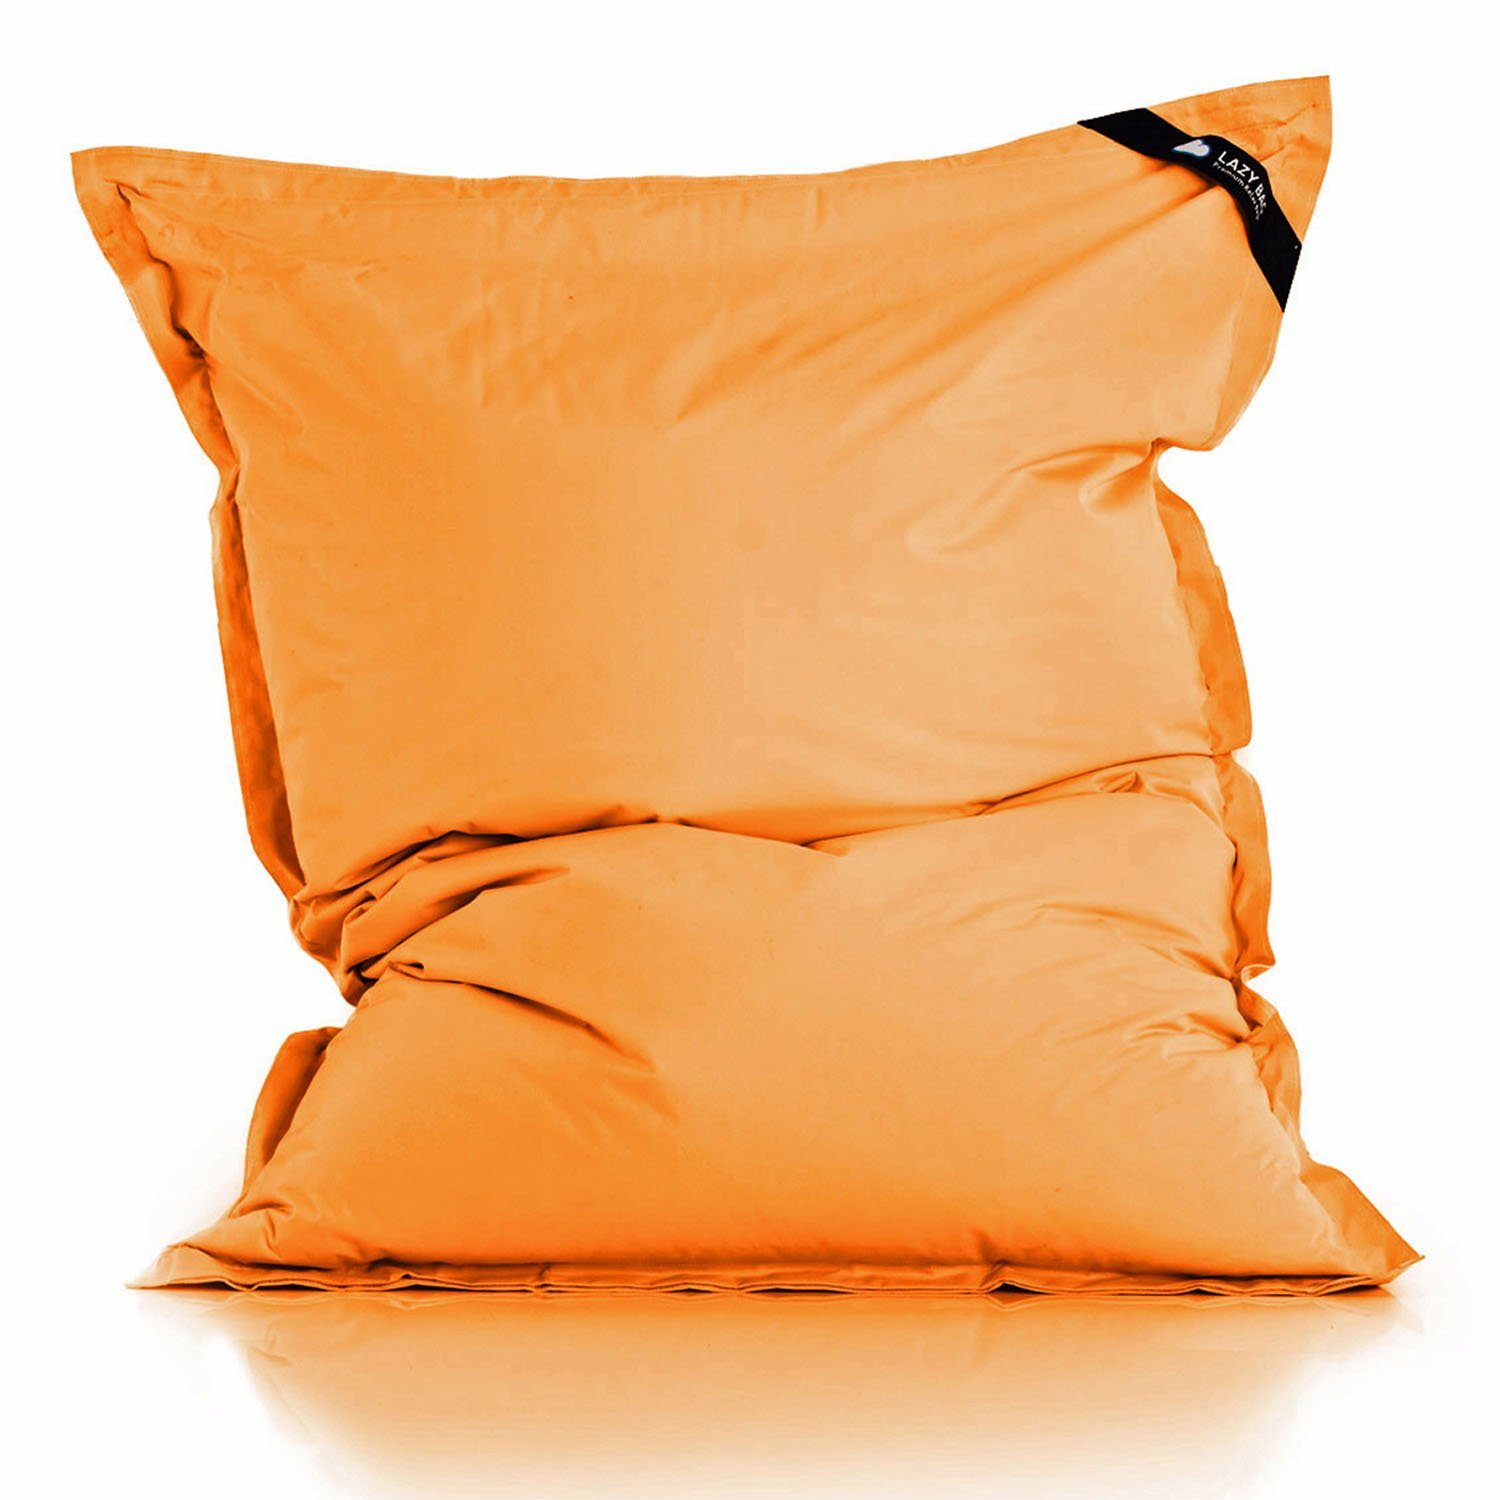 LazyBag Sitzsack Original Indoor & Outdoor Bean-Bag (XL 250 Liter, Riesensitzsack), Junior-Sitzkissen Sessel Orange | Sitzsäcke